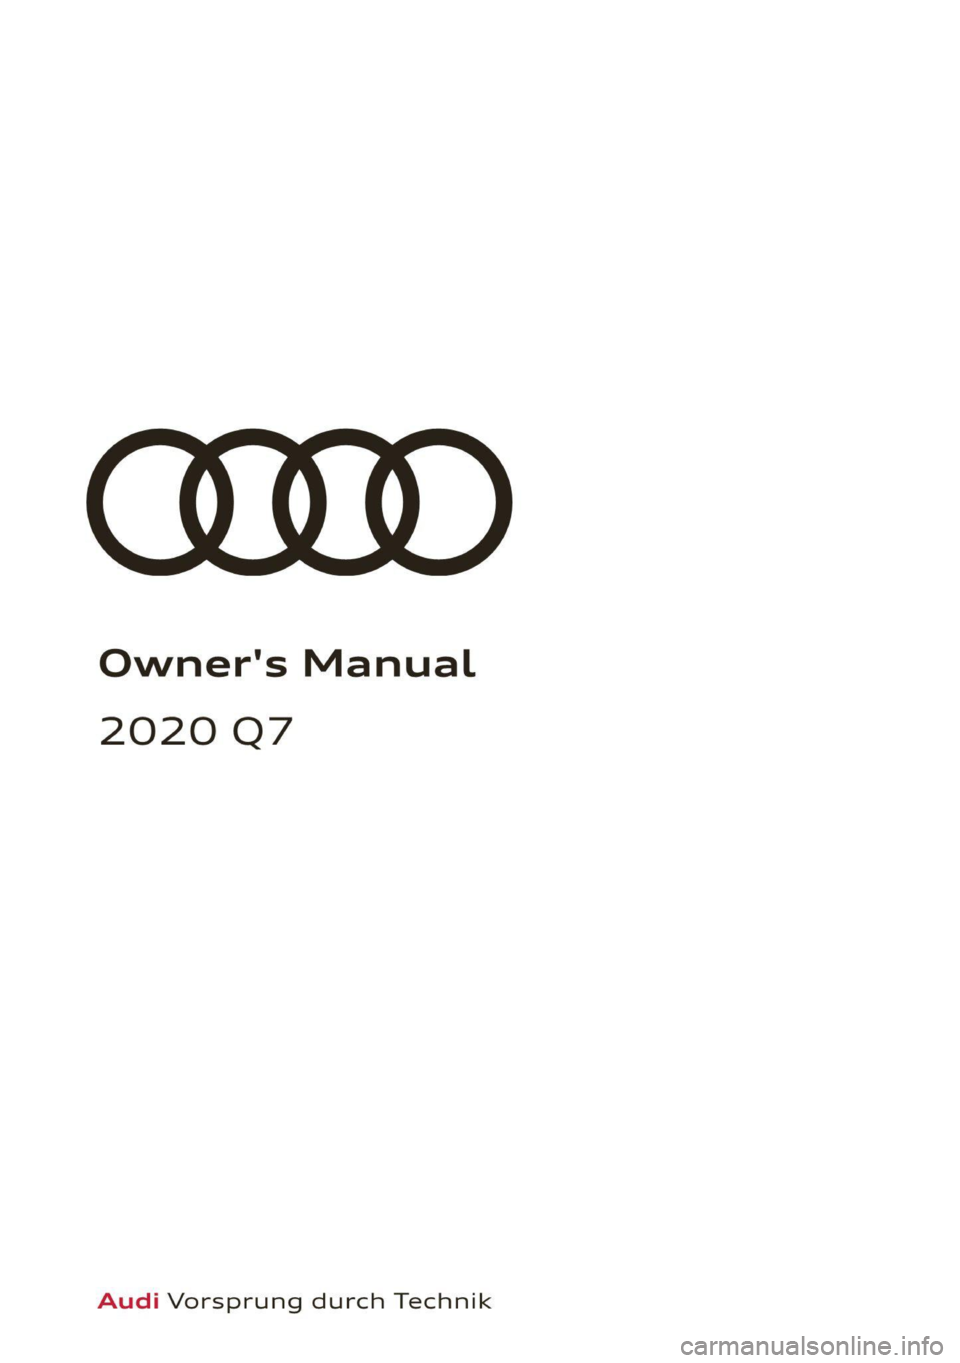 AUDI Q7 2020  Owner´s Manual Owner's Manual 
2020 Q7 
Audi Vorsprung durch Technik  